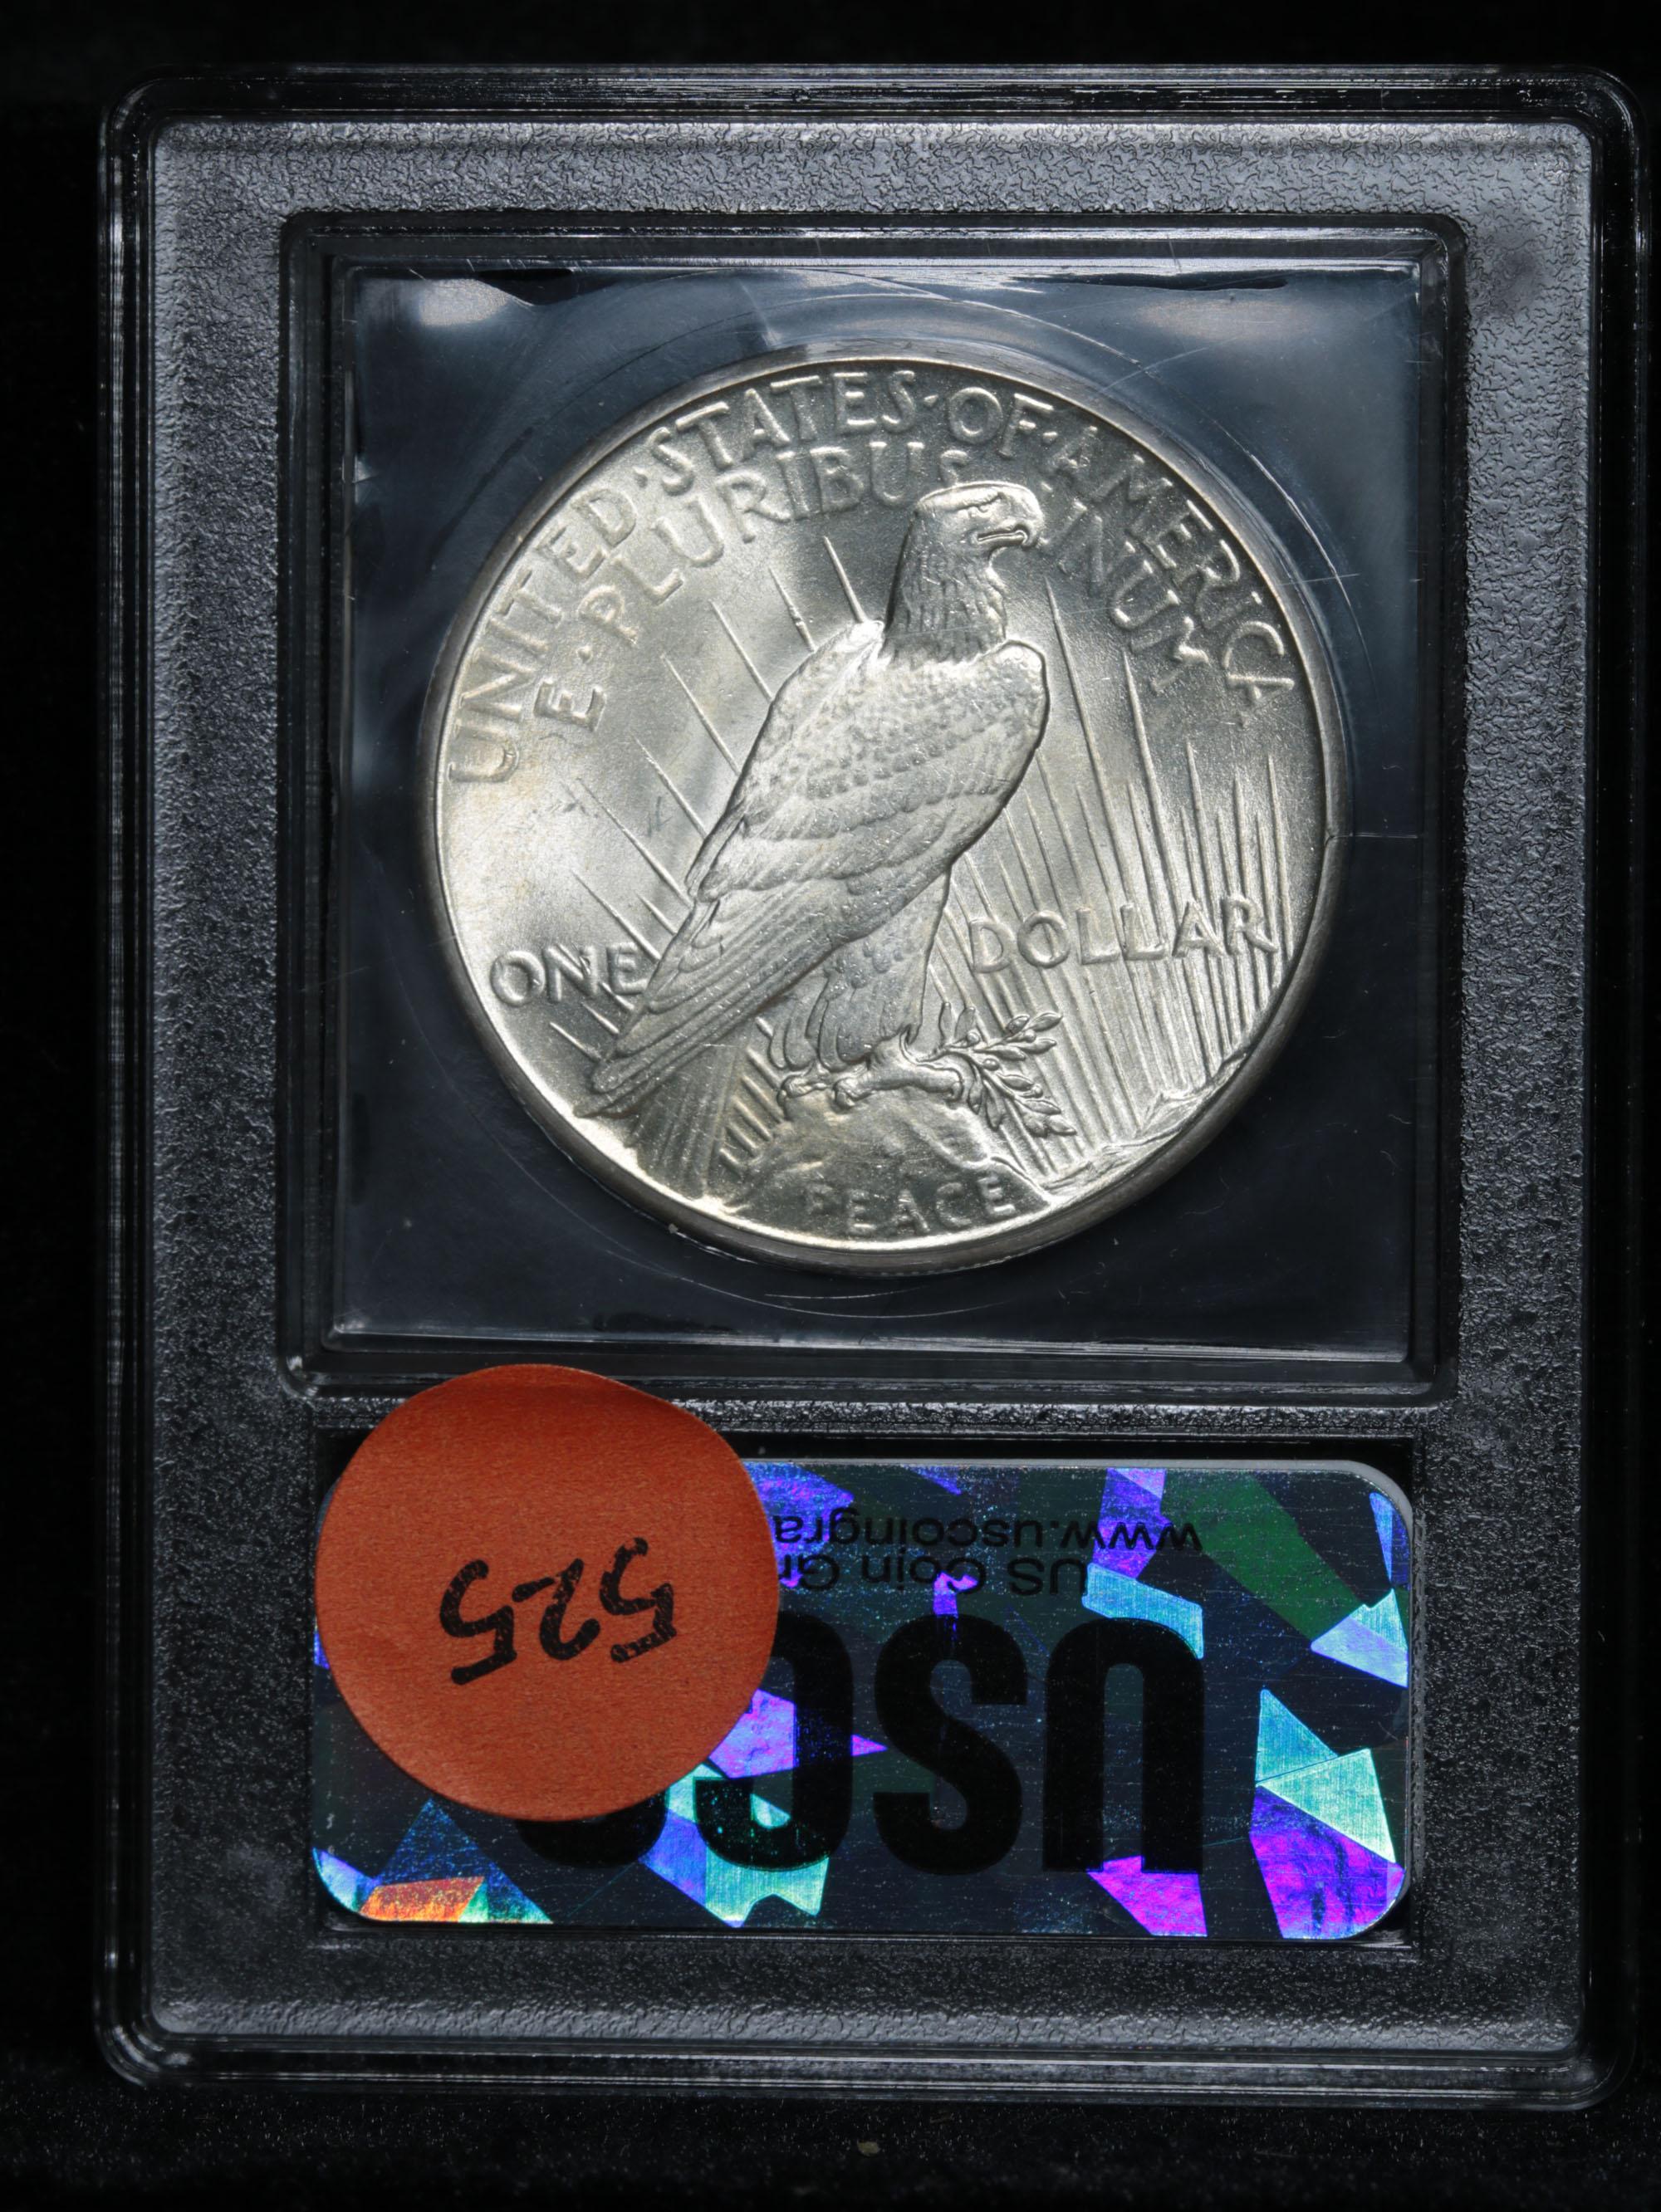 ***Auction Highlight*** 1935-p Peace Dollar $1 Graded GEM Unc By USCG (fc)